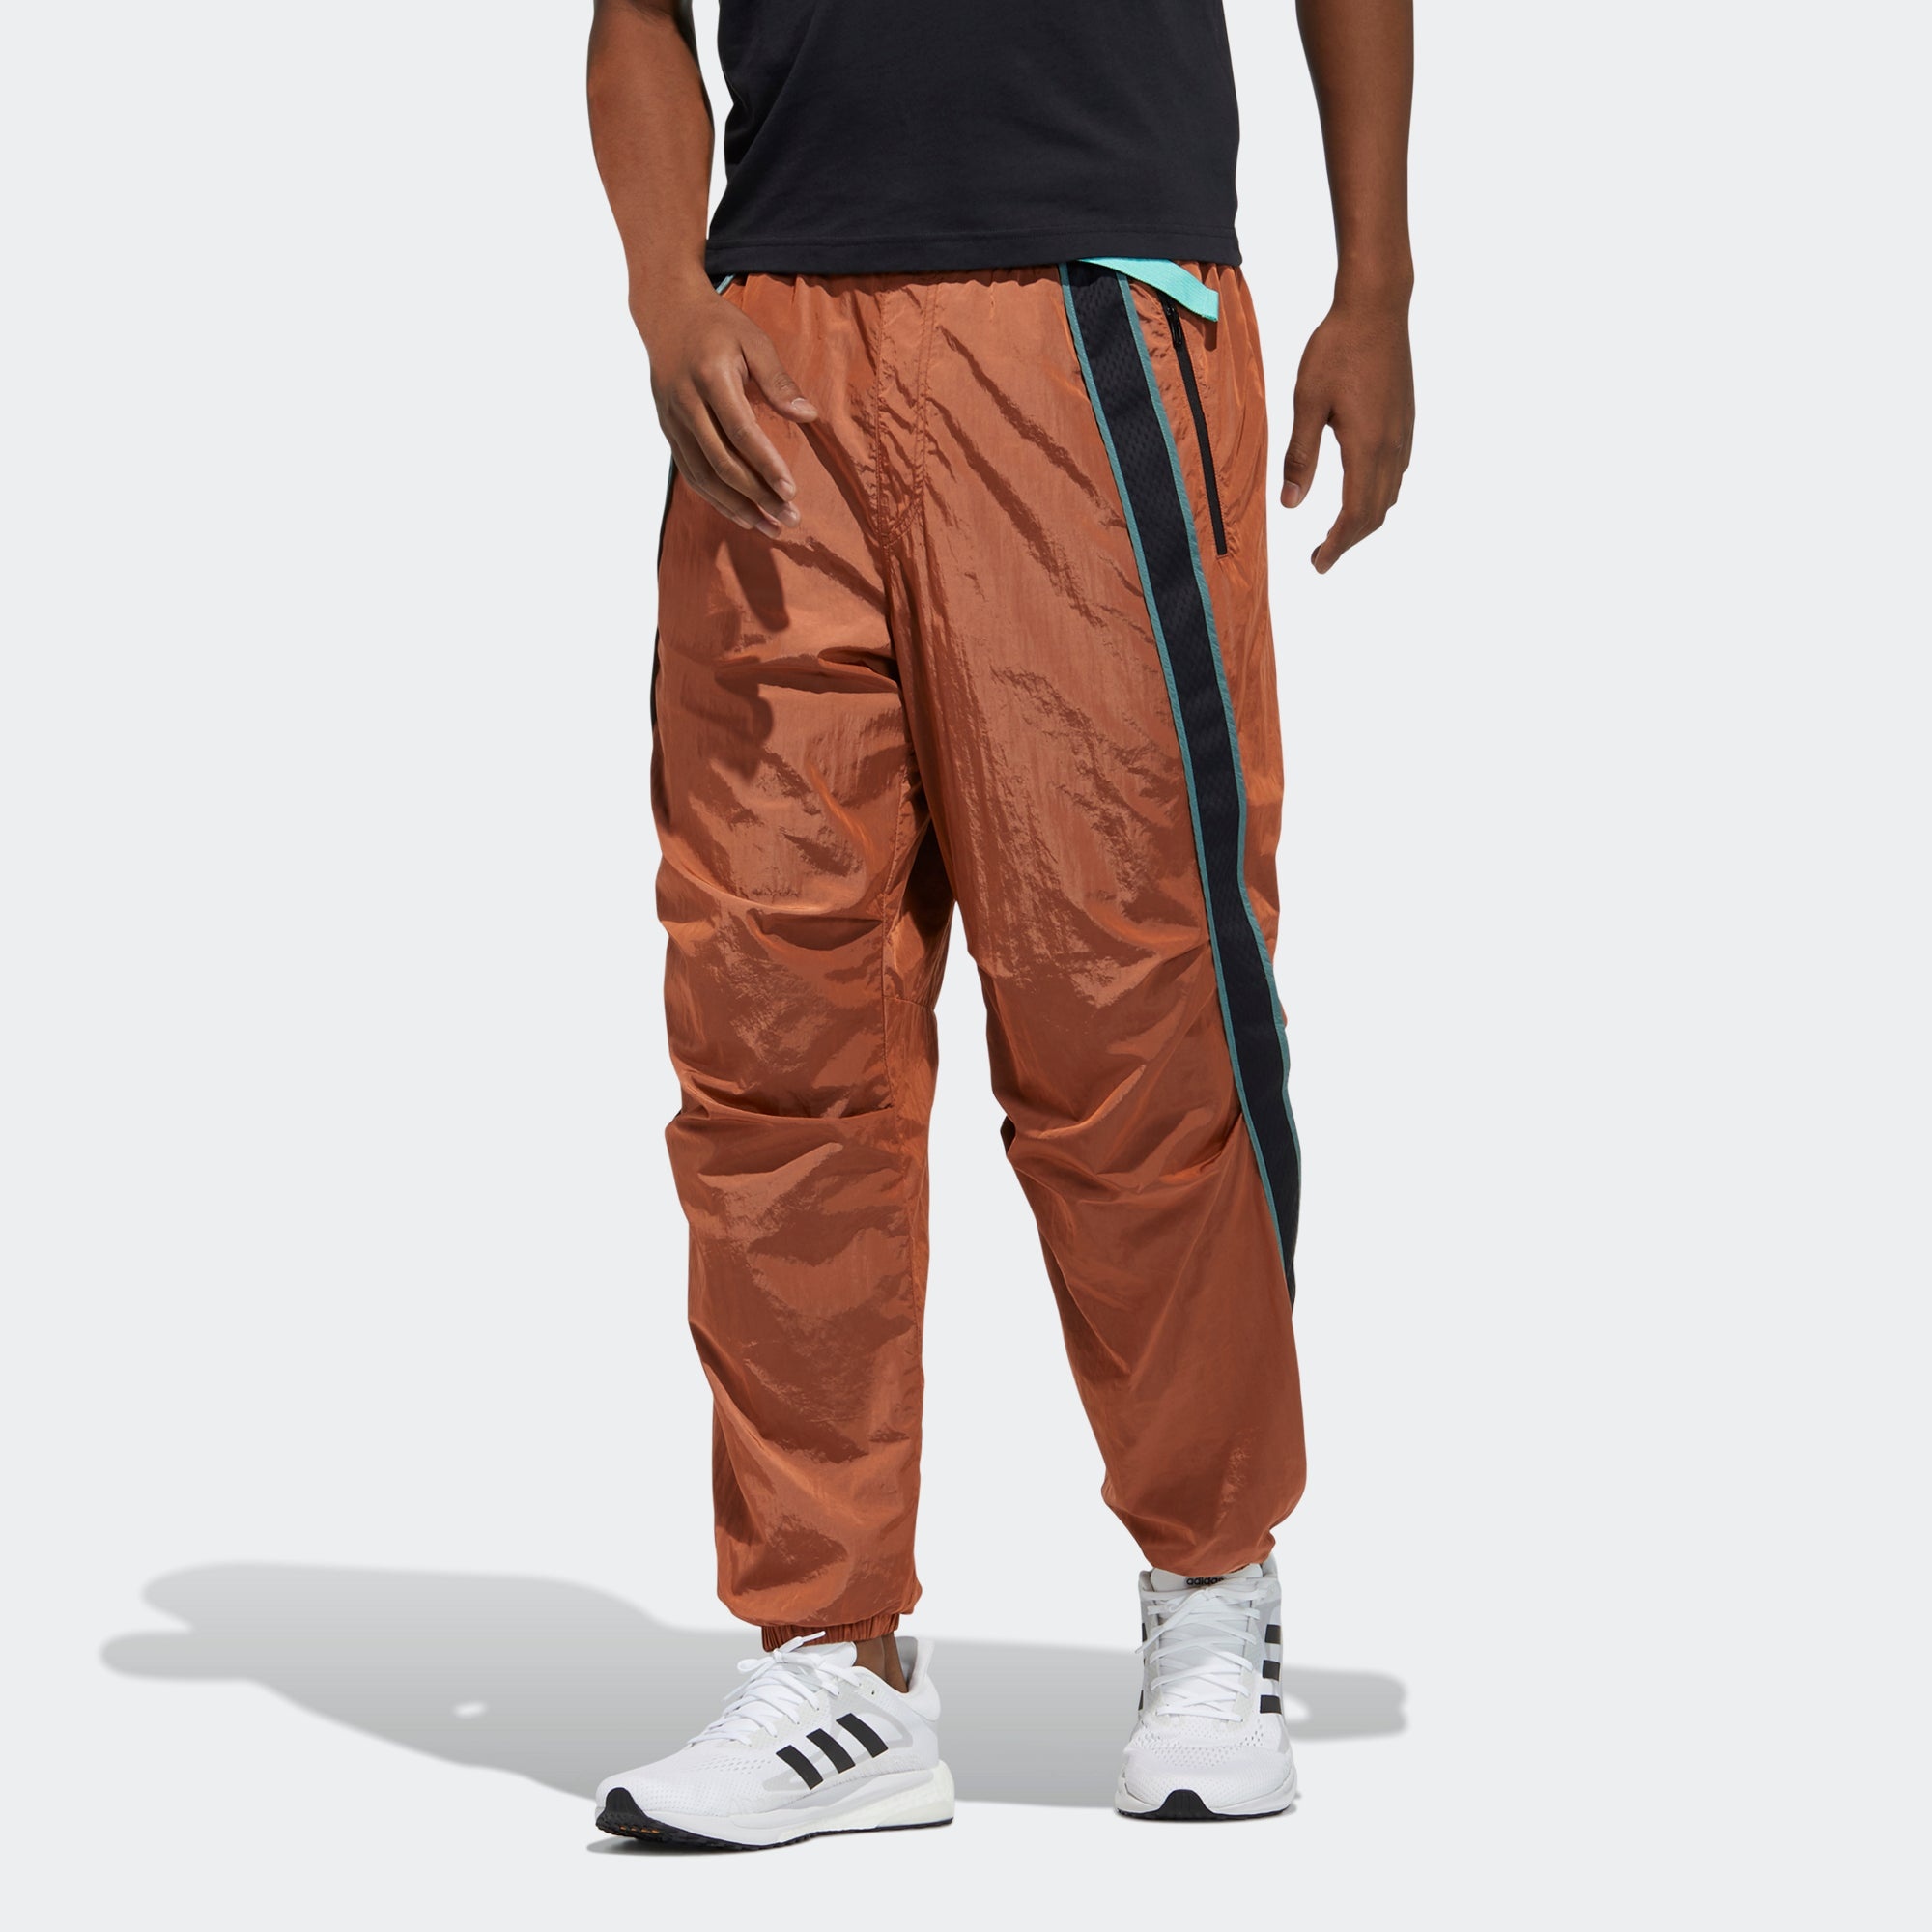 adidas Ub Pnt Wv Astro Contrasting Colors Woven Bundle Feet Sports Pants Orange Yellow GP0831 - 2